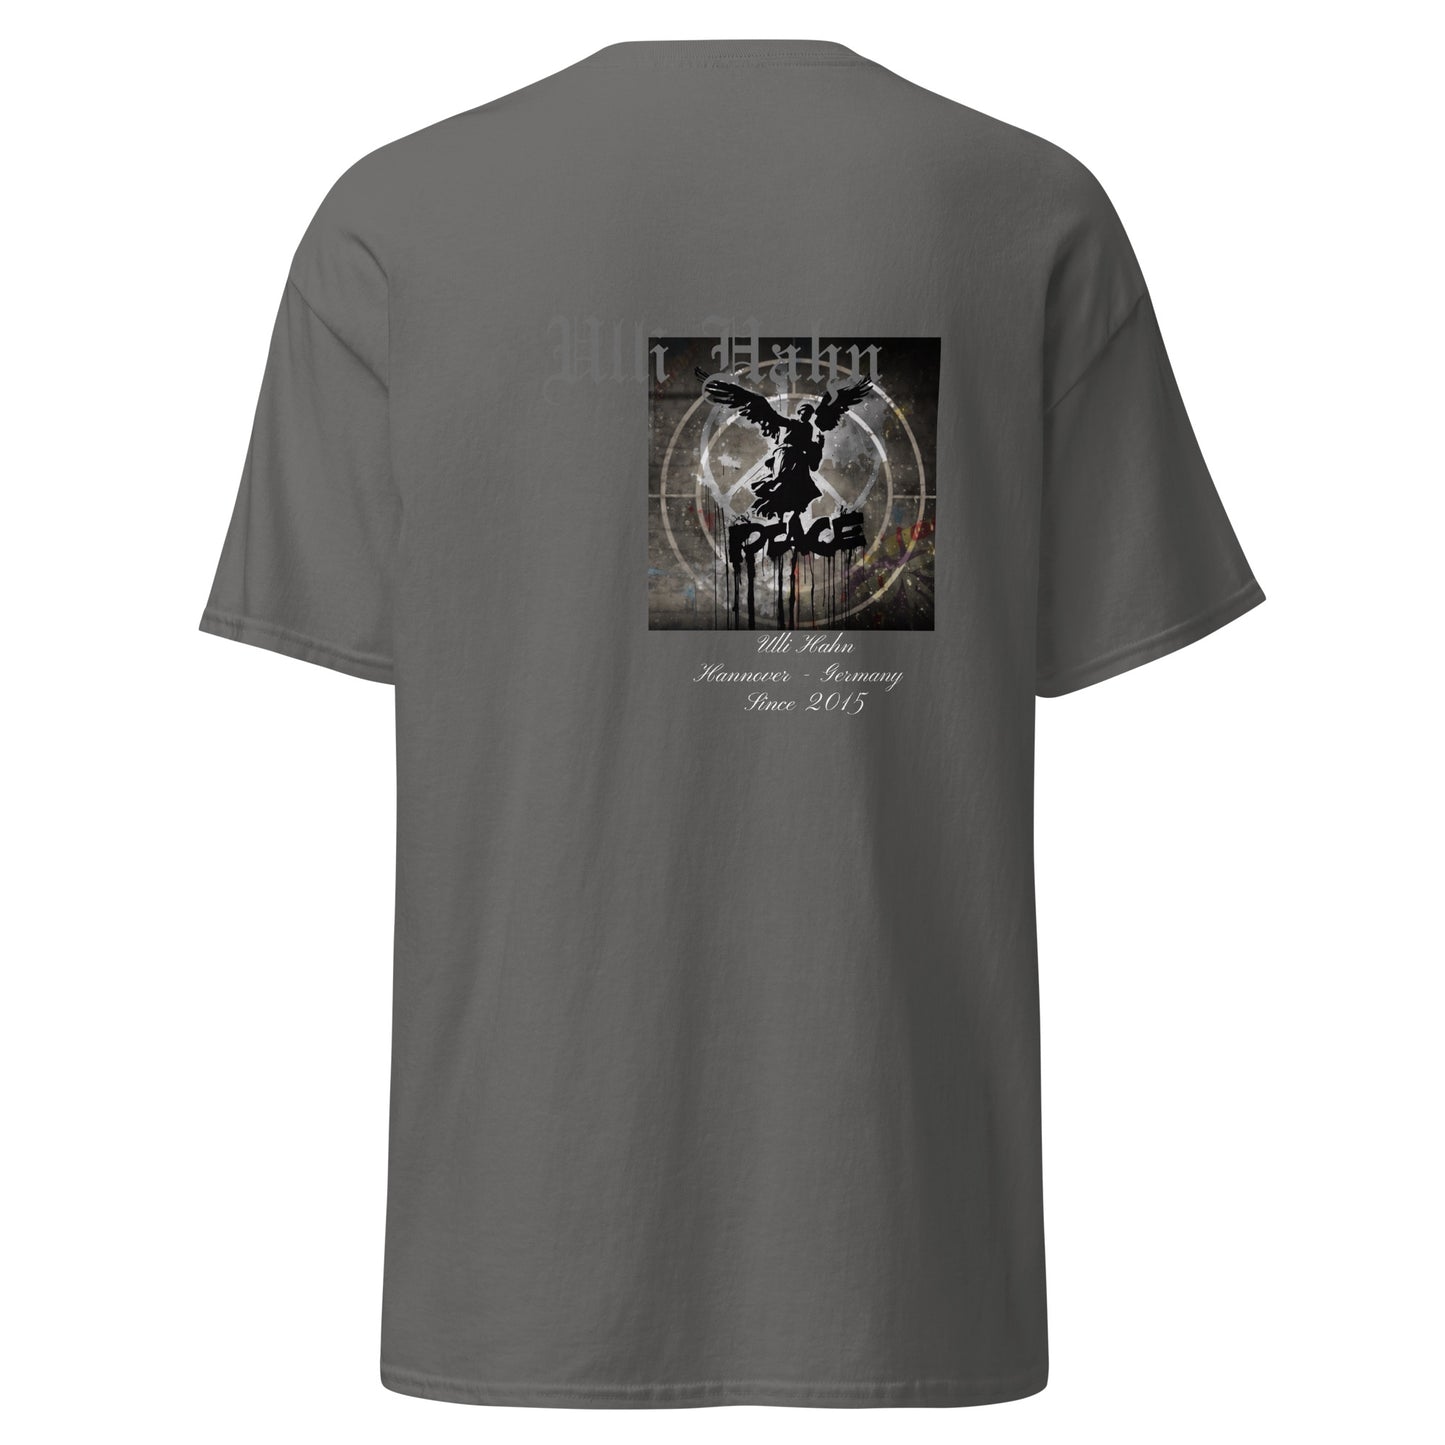 Ulli Hahn Oldpeace T-Shirt